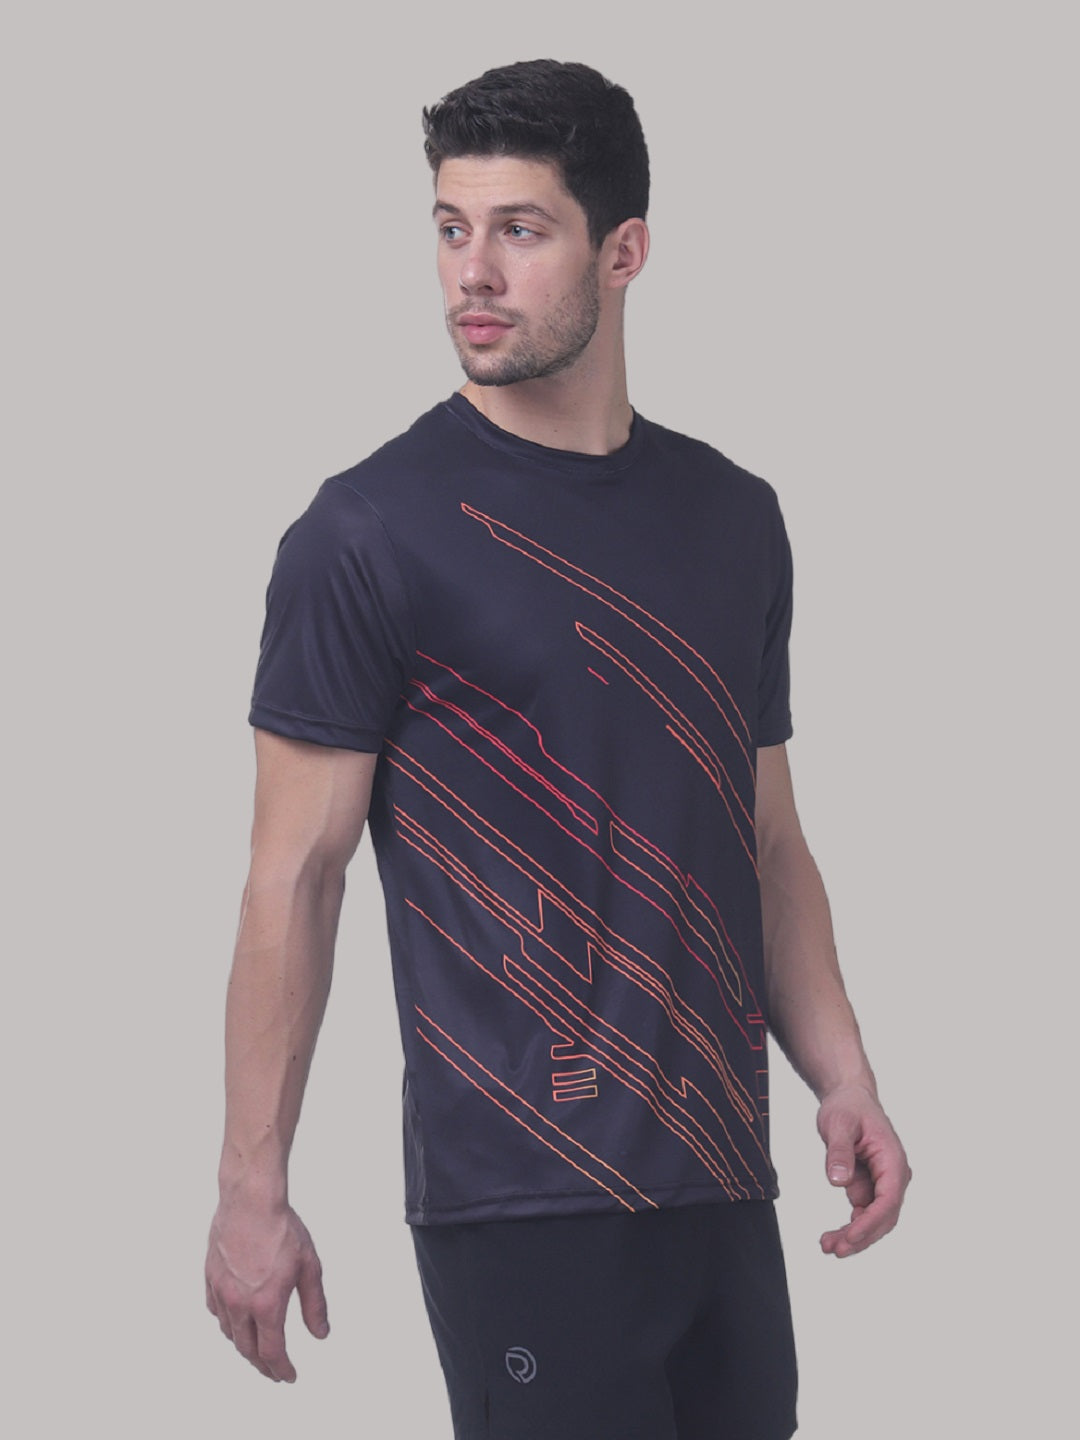 Men's Reflective Dryfit Tshirt With Flow Graphics